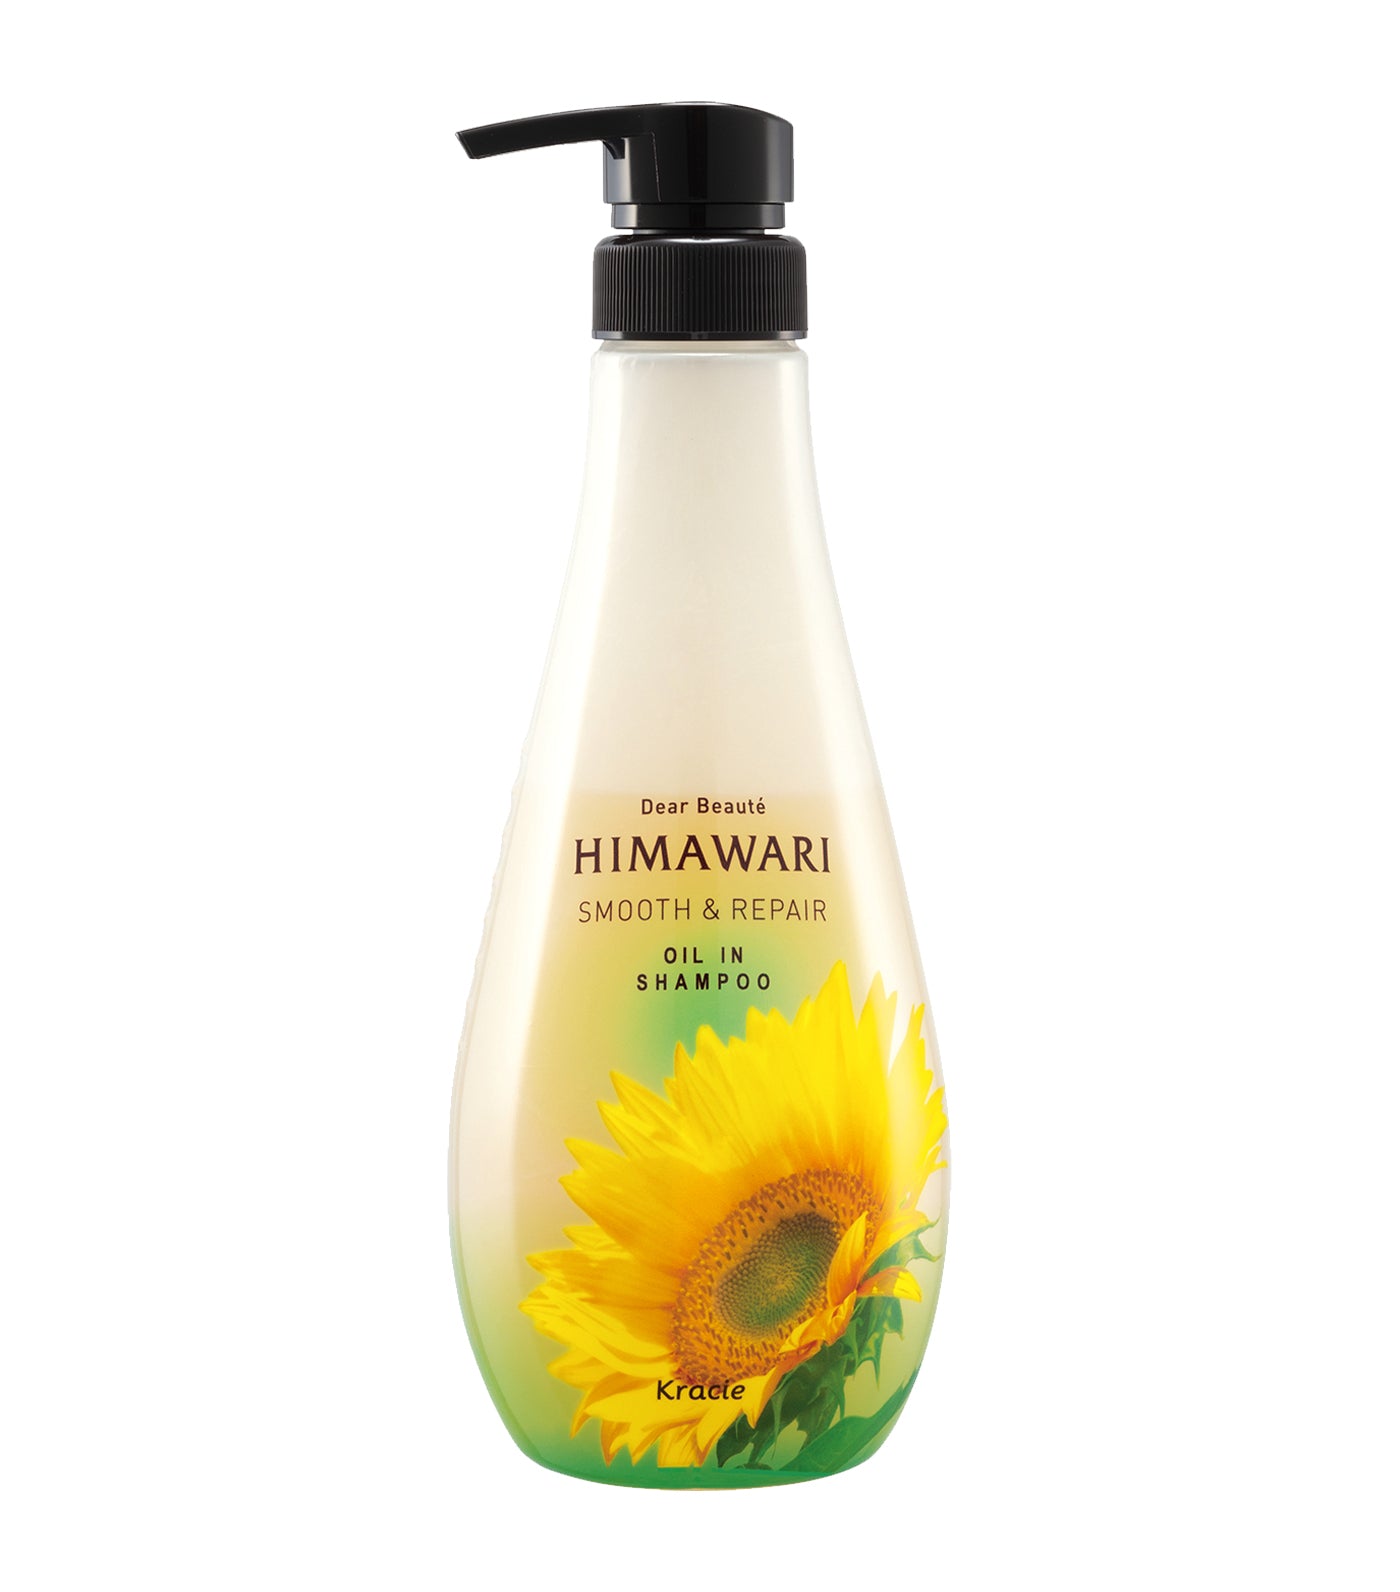 Dear Beaute Himawari Smooth and Repair Oil in Shampoo